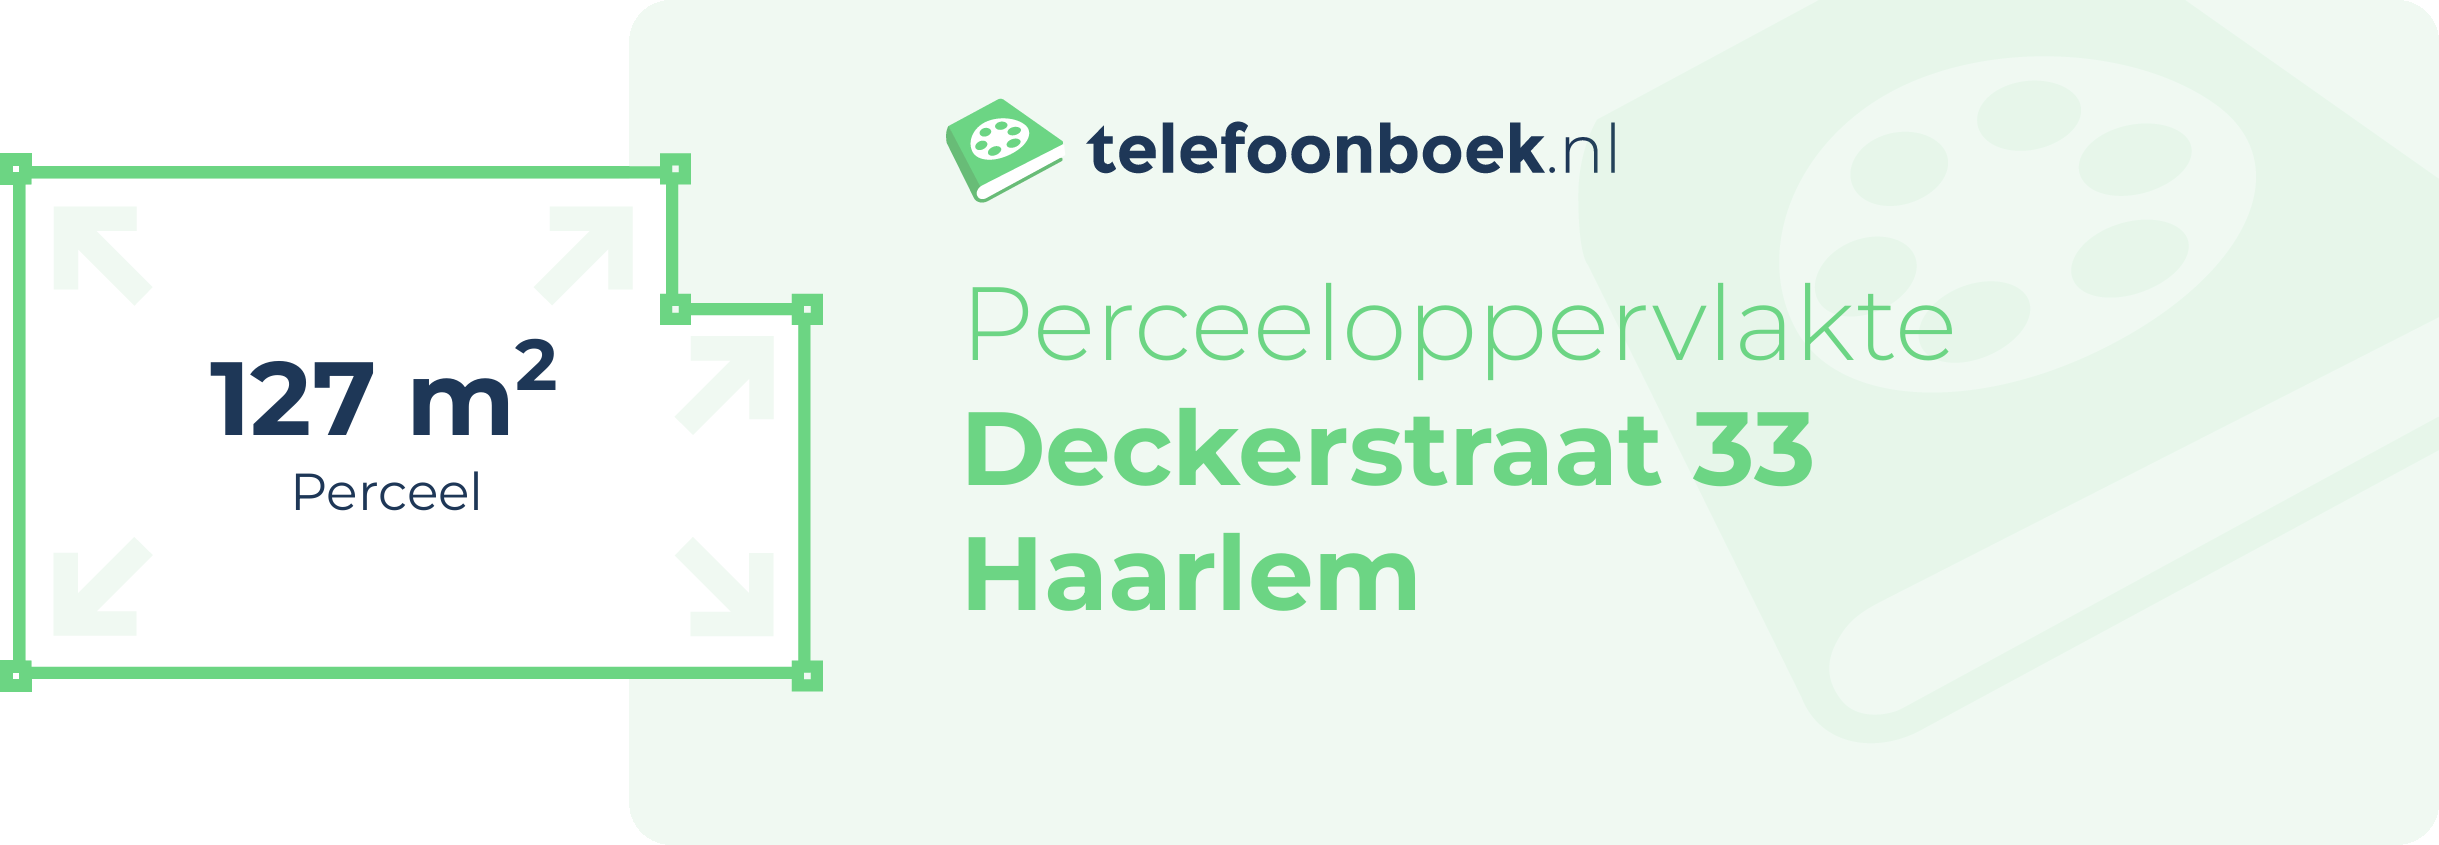 Perceeloppervlakte Deckerstraat 33 Haarlem